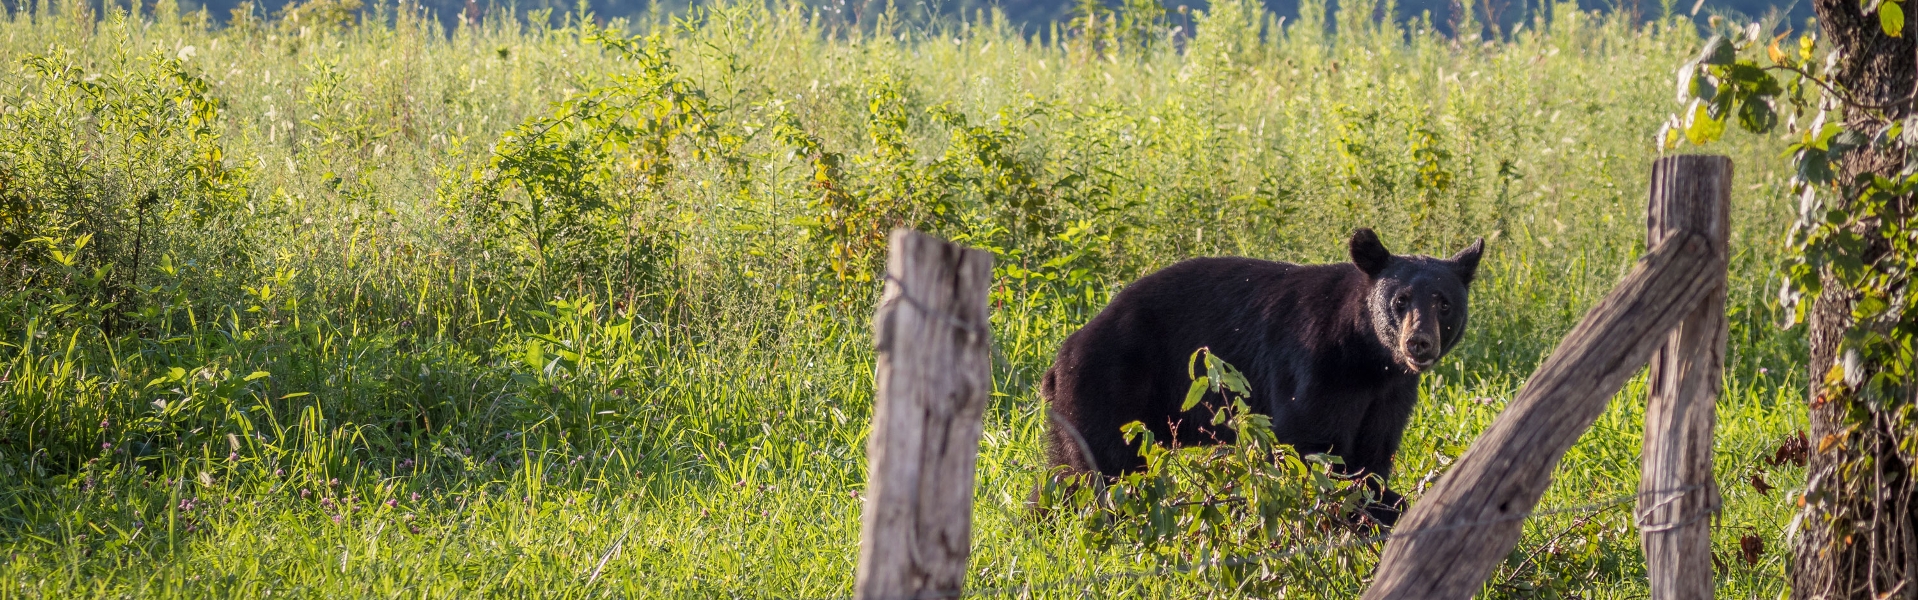 Black bear in field behind wooden fence.